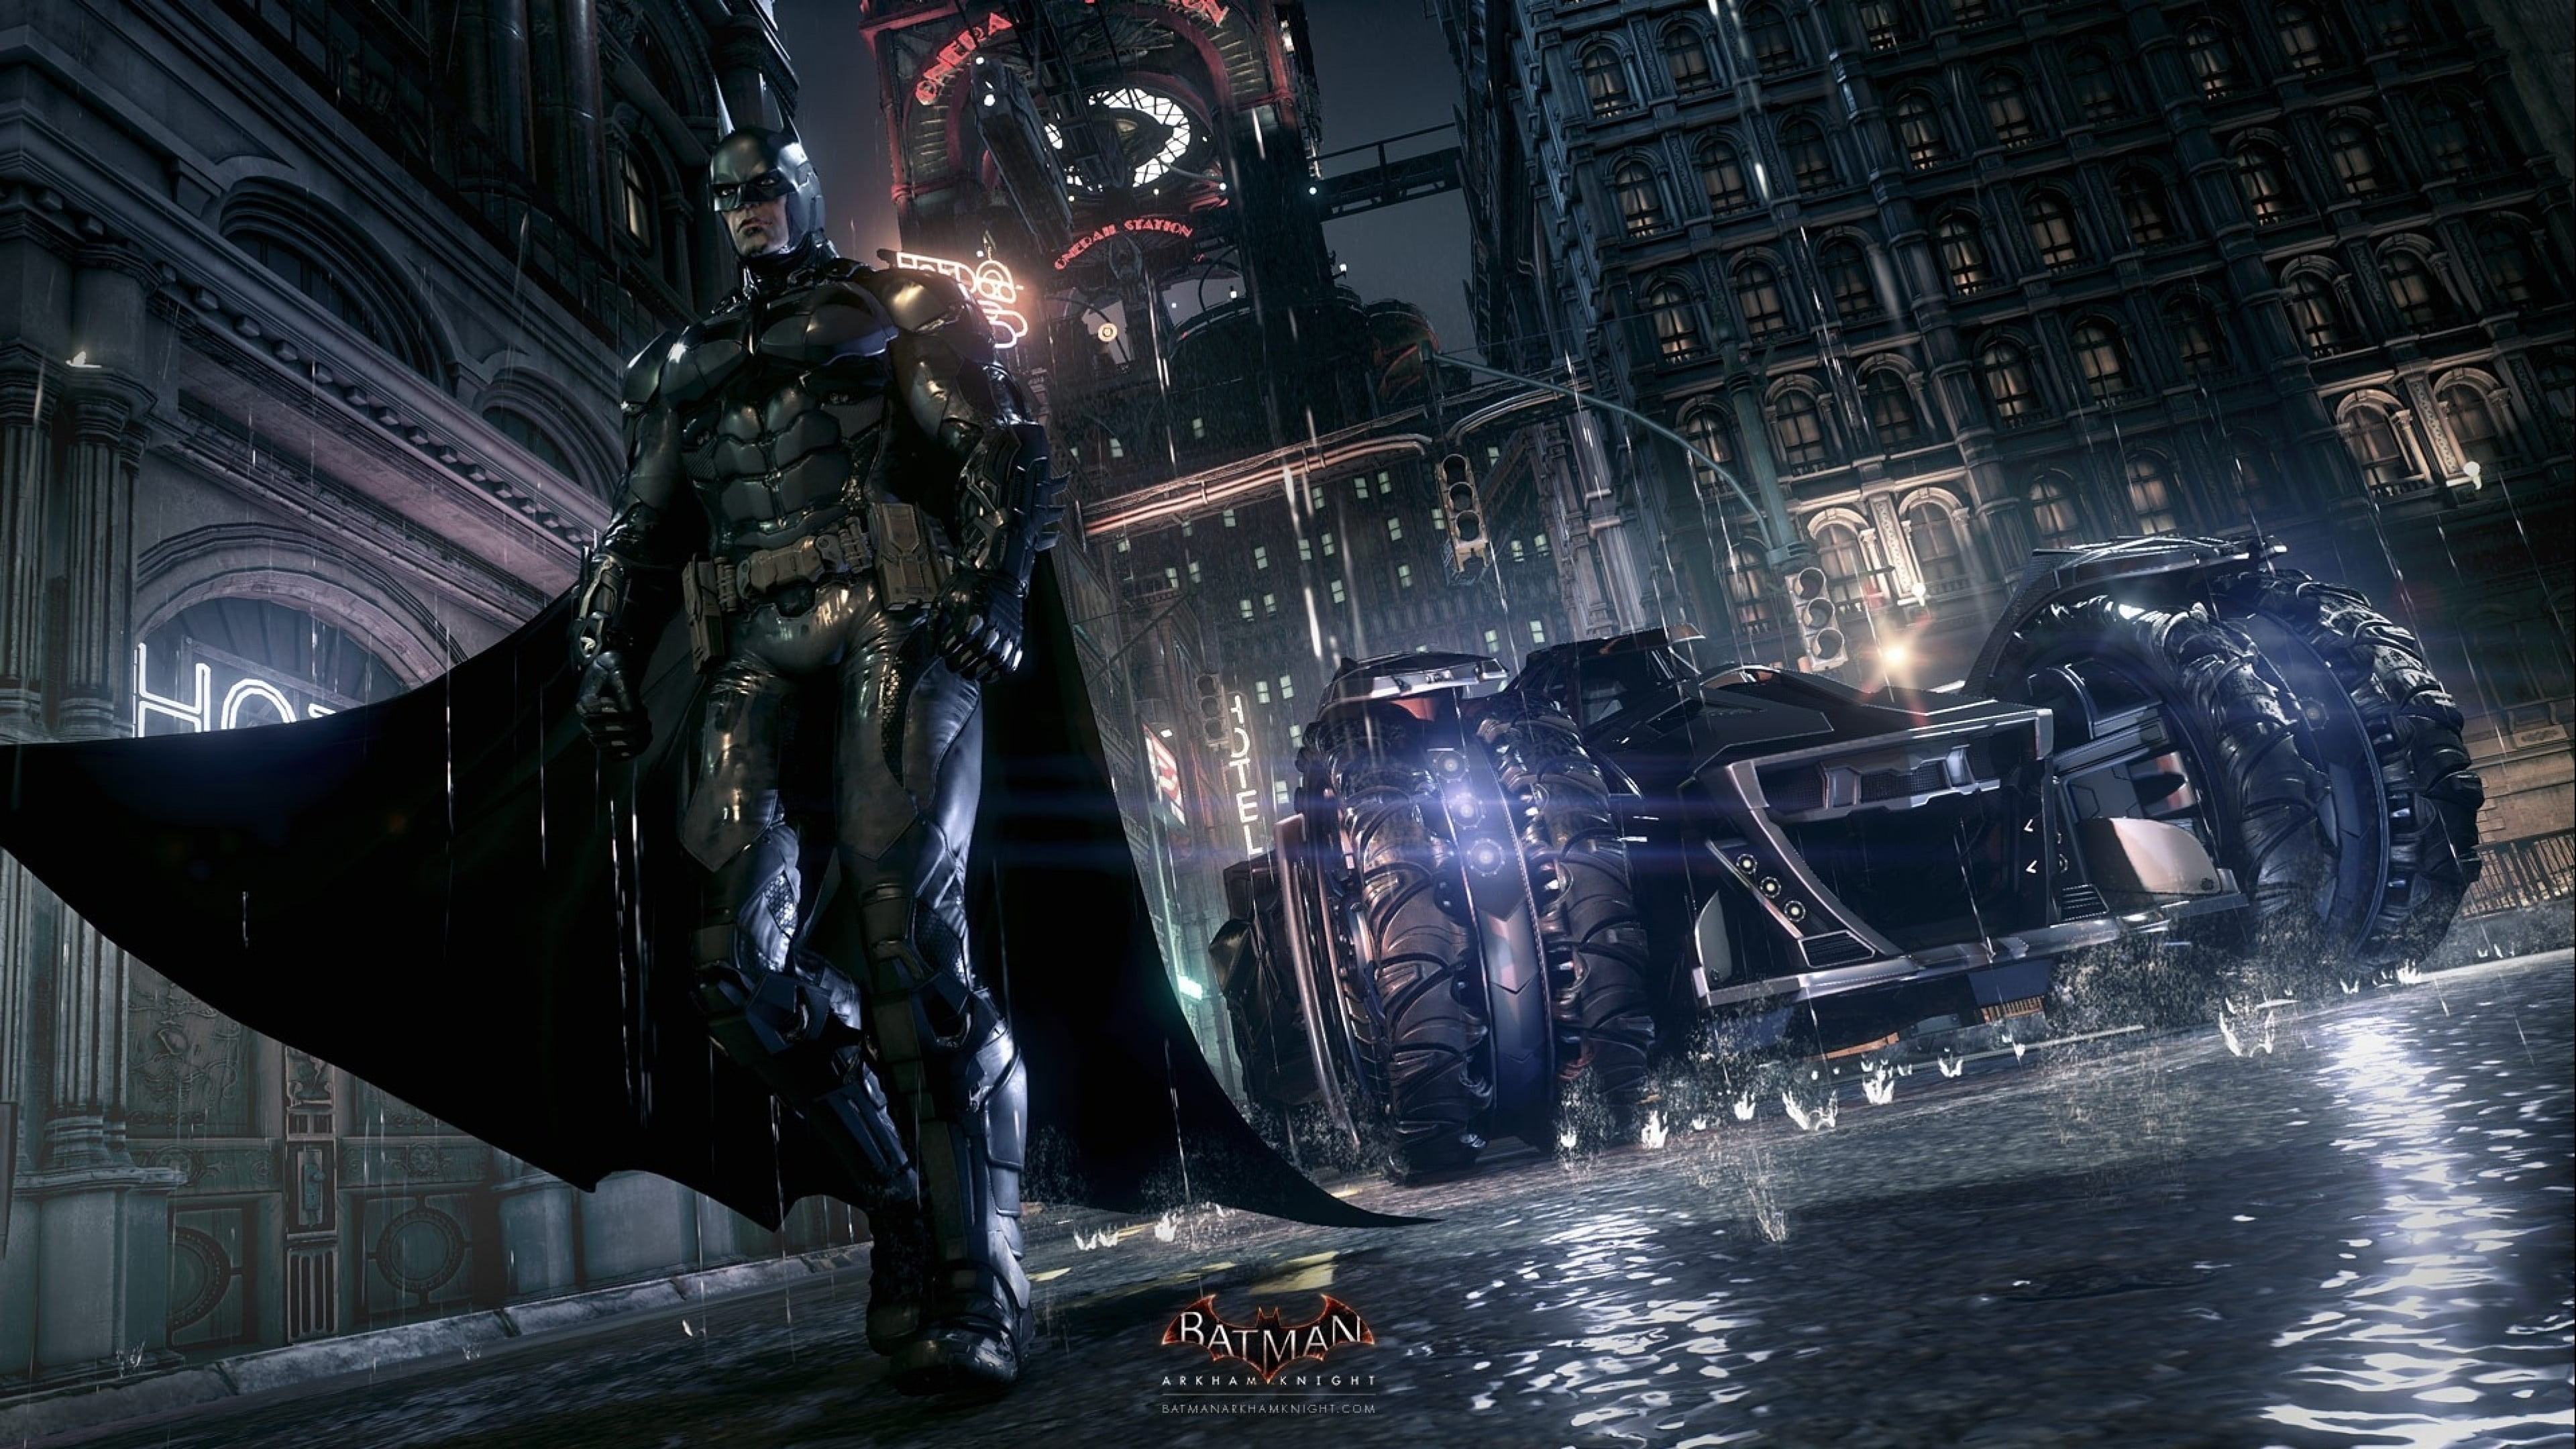 Batman wallpaper, Batman: Arkham Knight, Rocksteady Studios, Batmobile